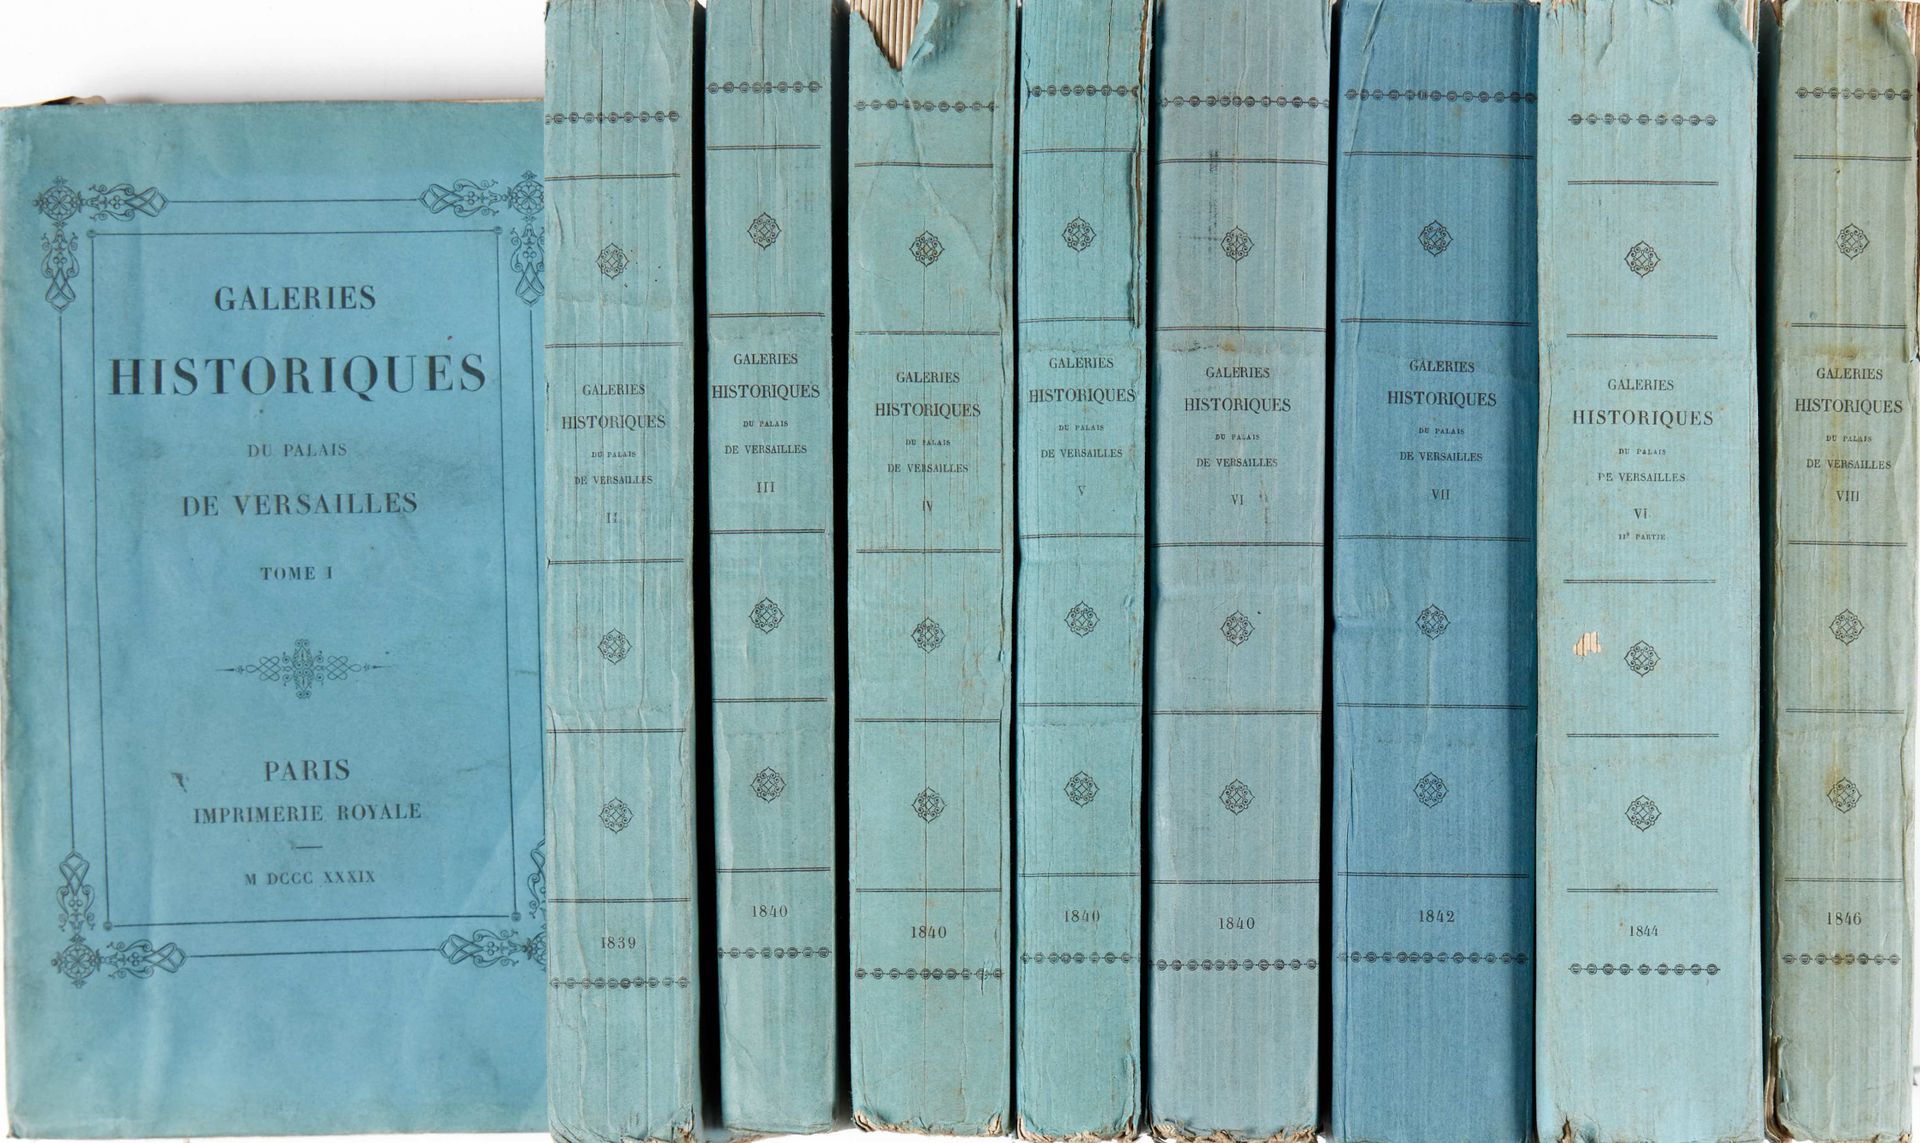 Null 凡尔赛宫的历史陈列馆。巴黎，国家出版社，1839-1846年，8卷9册。平装书，印刷封面。
缺少第九卷。
雀斑。